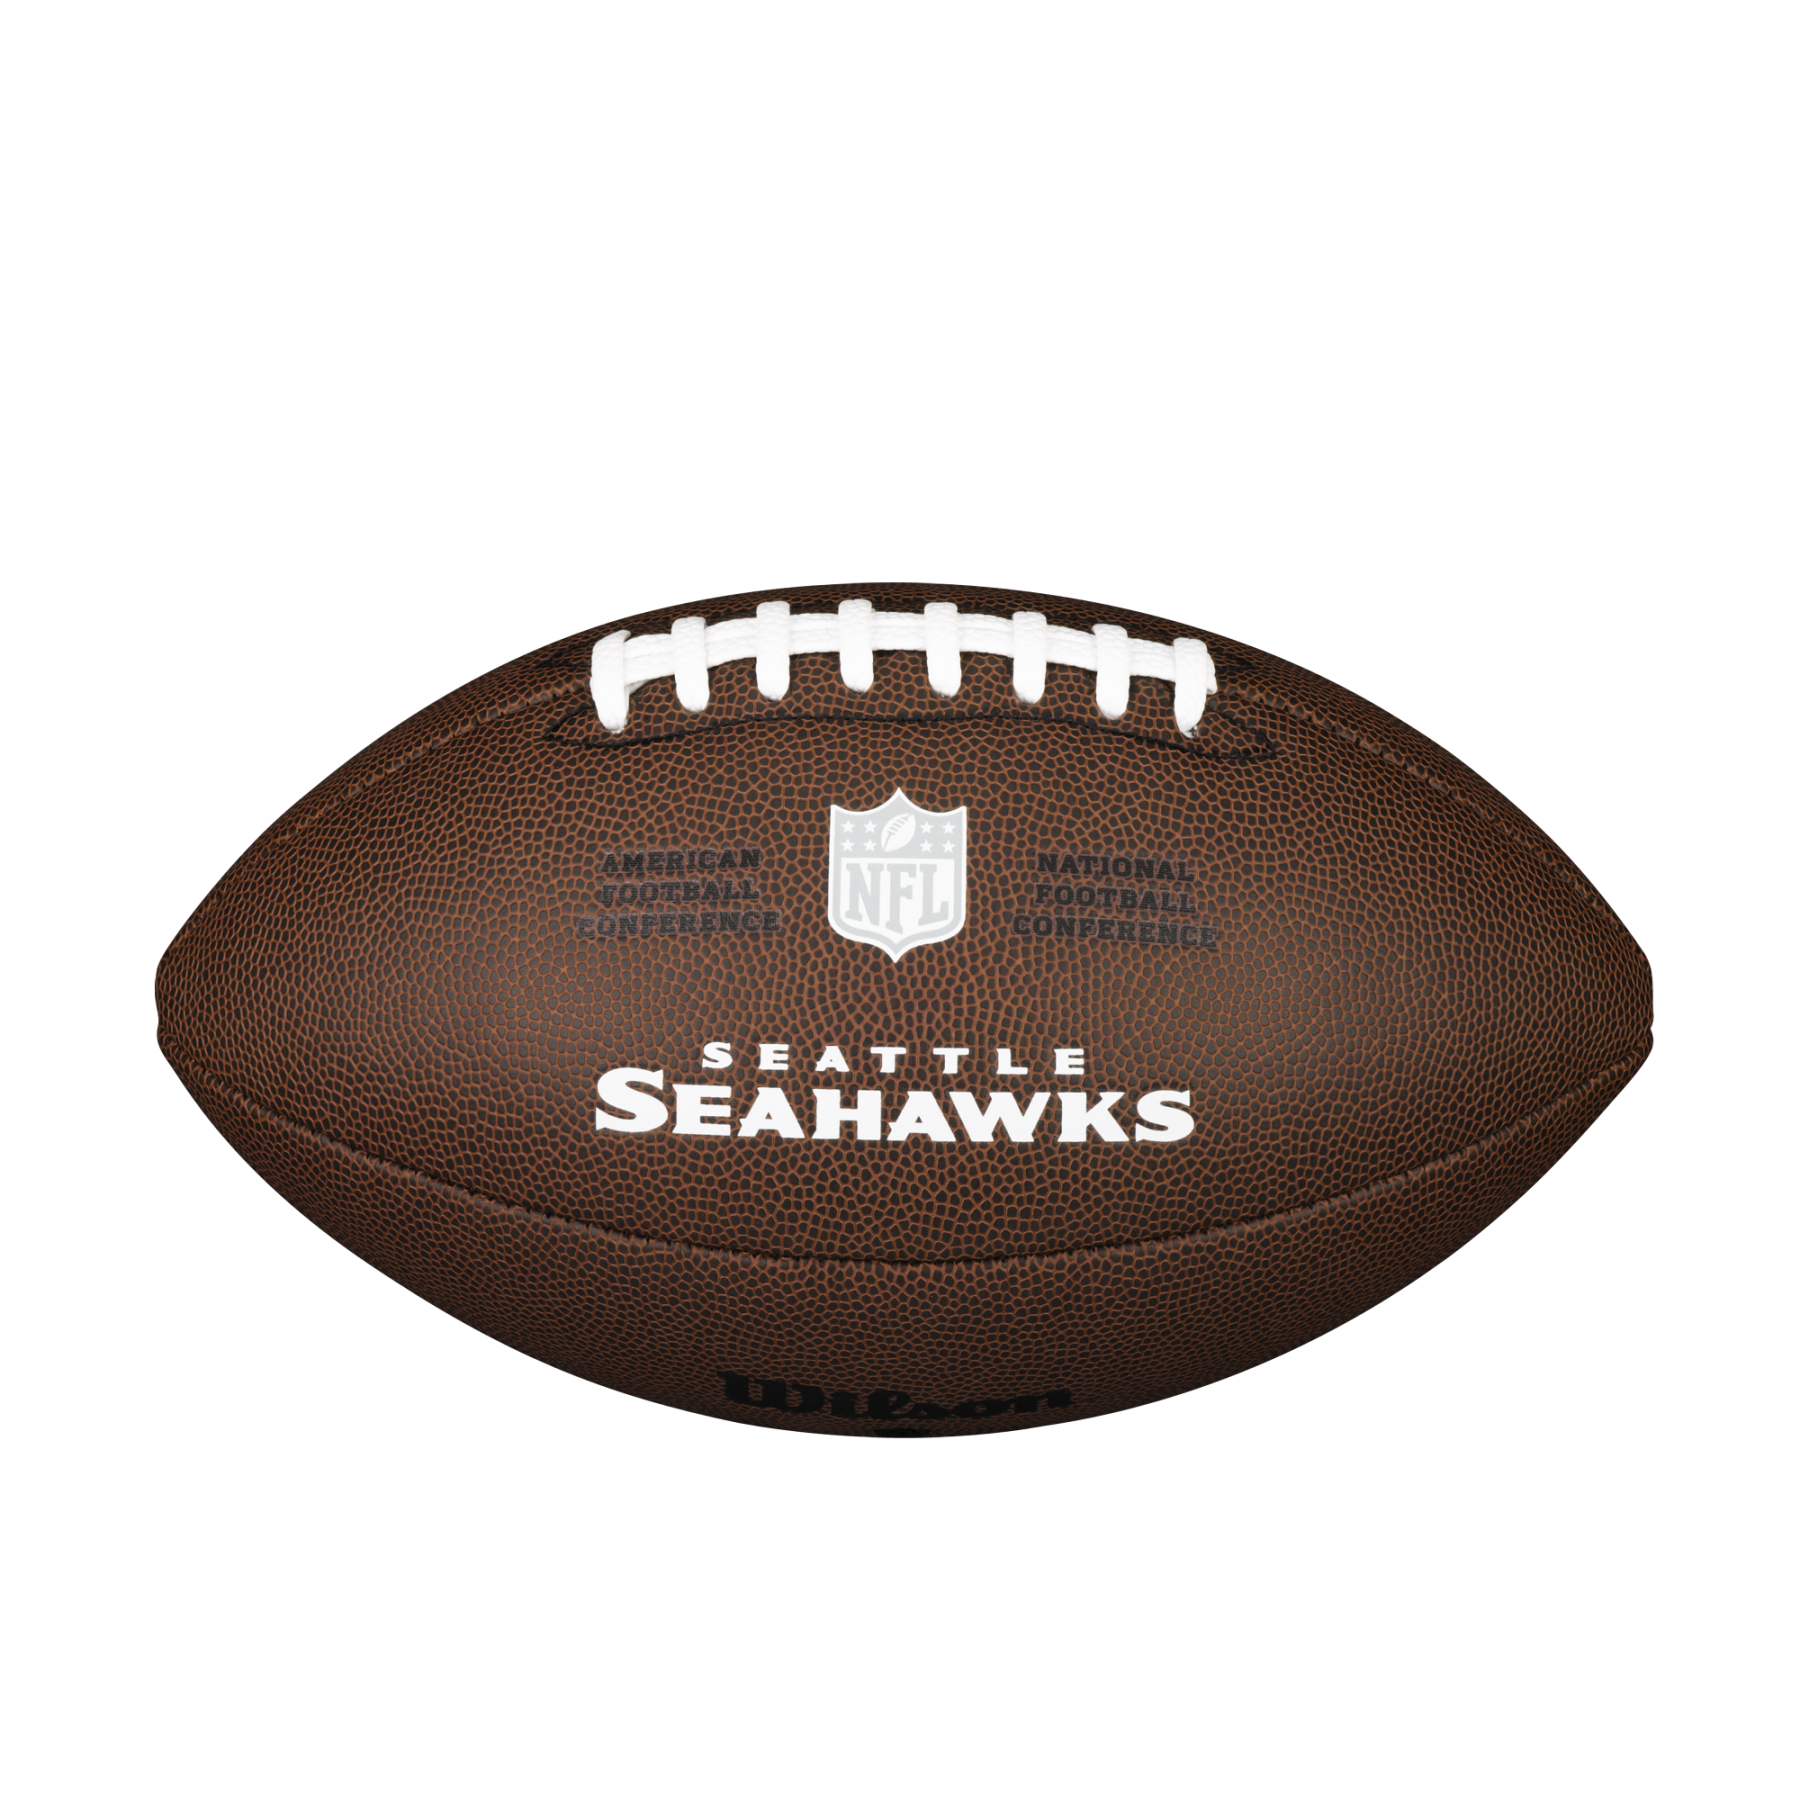 American Football Ball Wilson Seahawks NFL Licensed